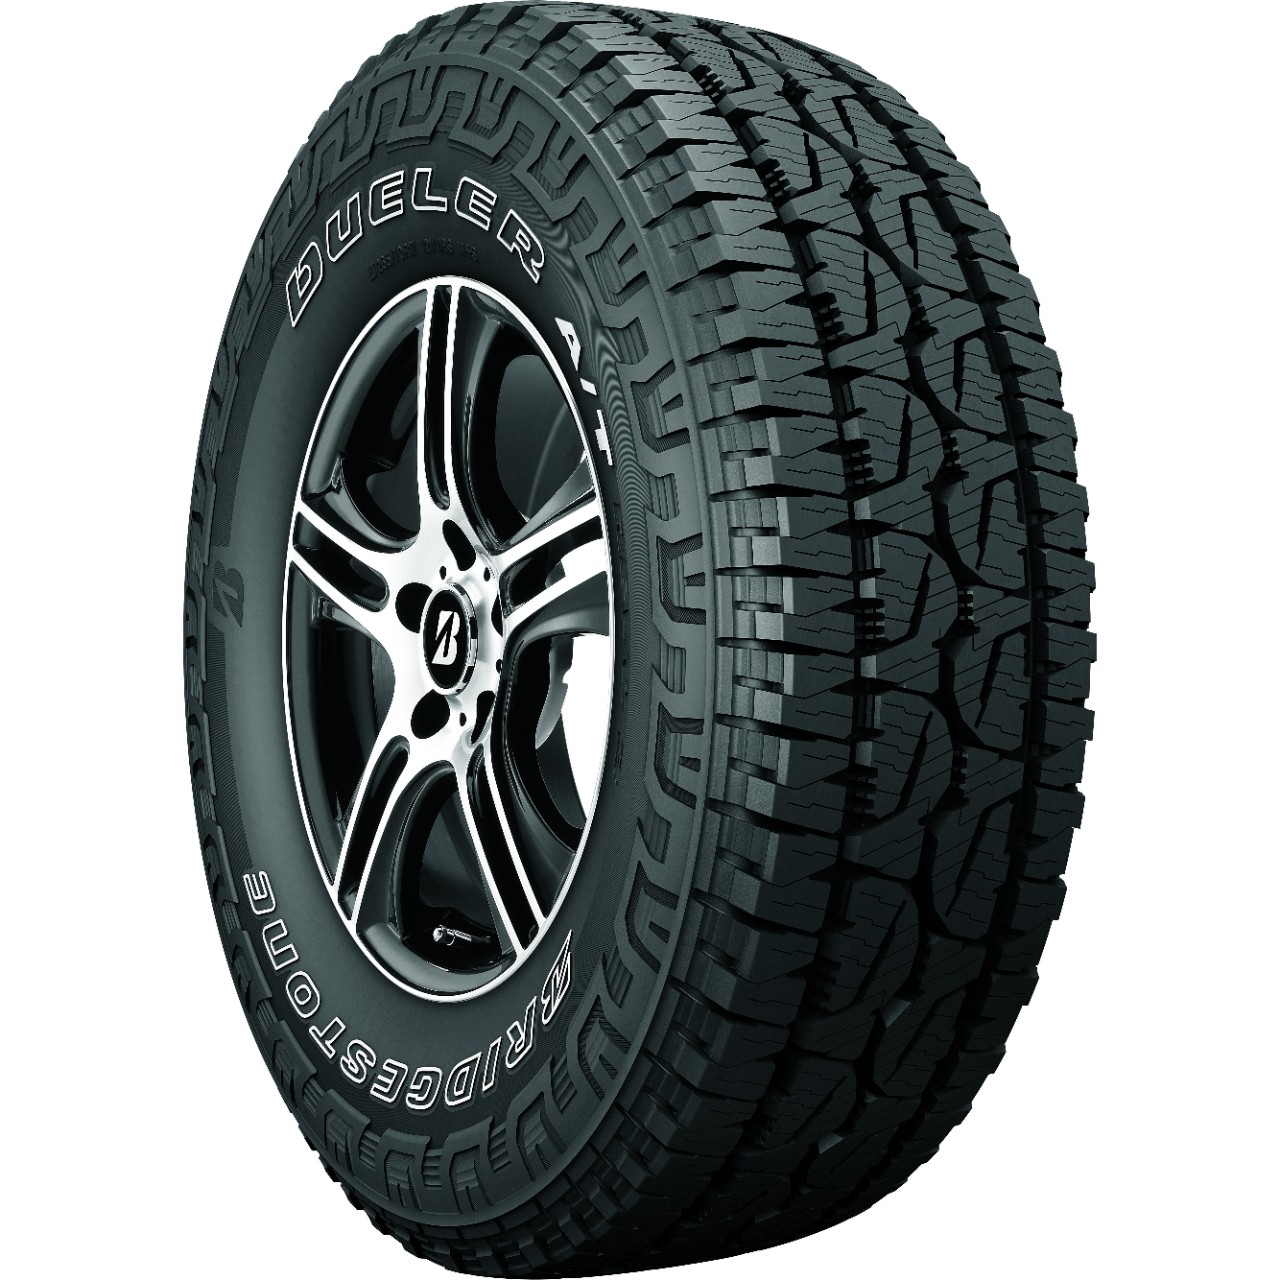 Bridgestone Tires review | Top Ten Reviews